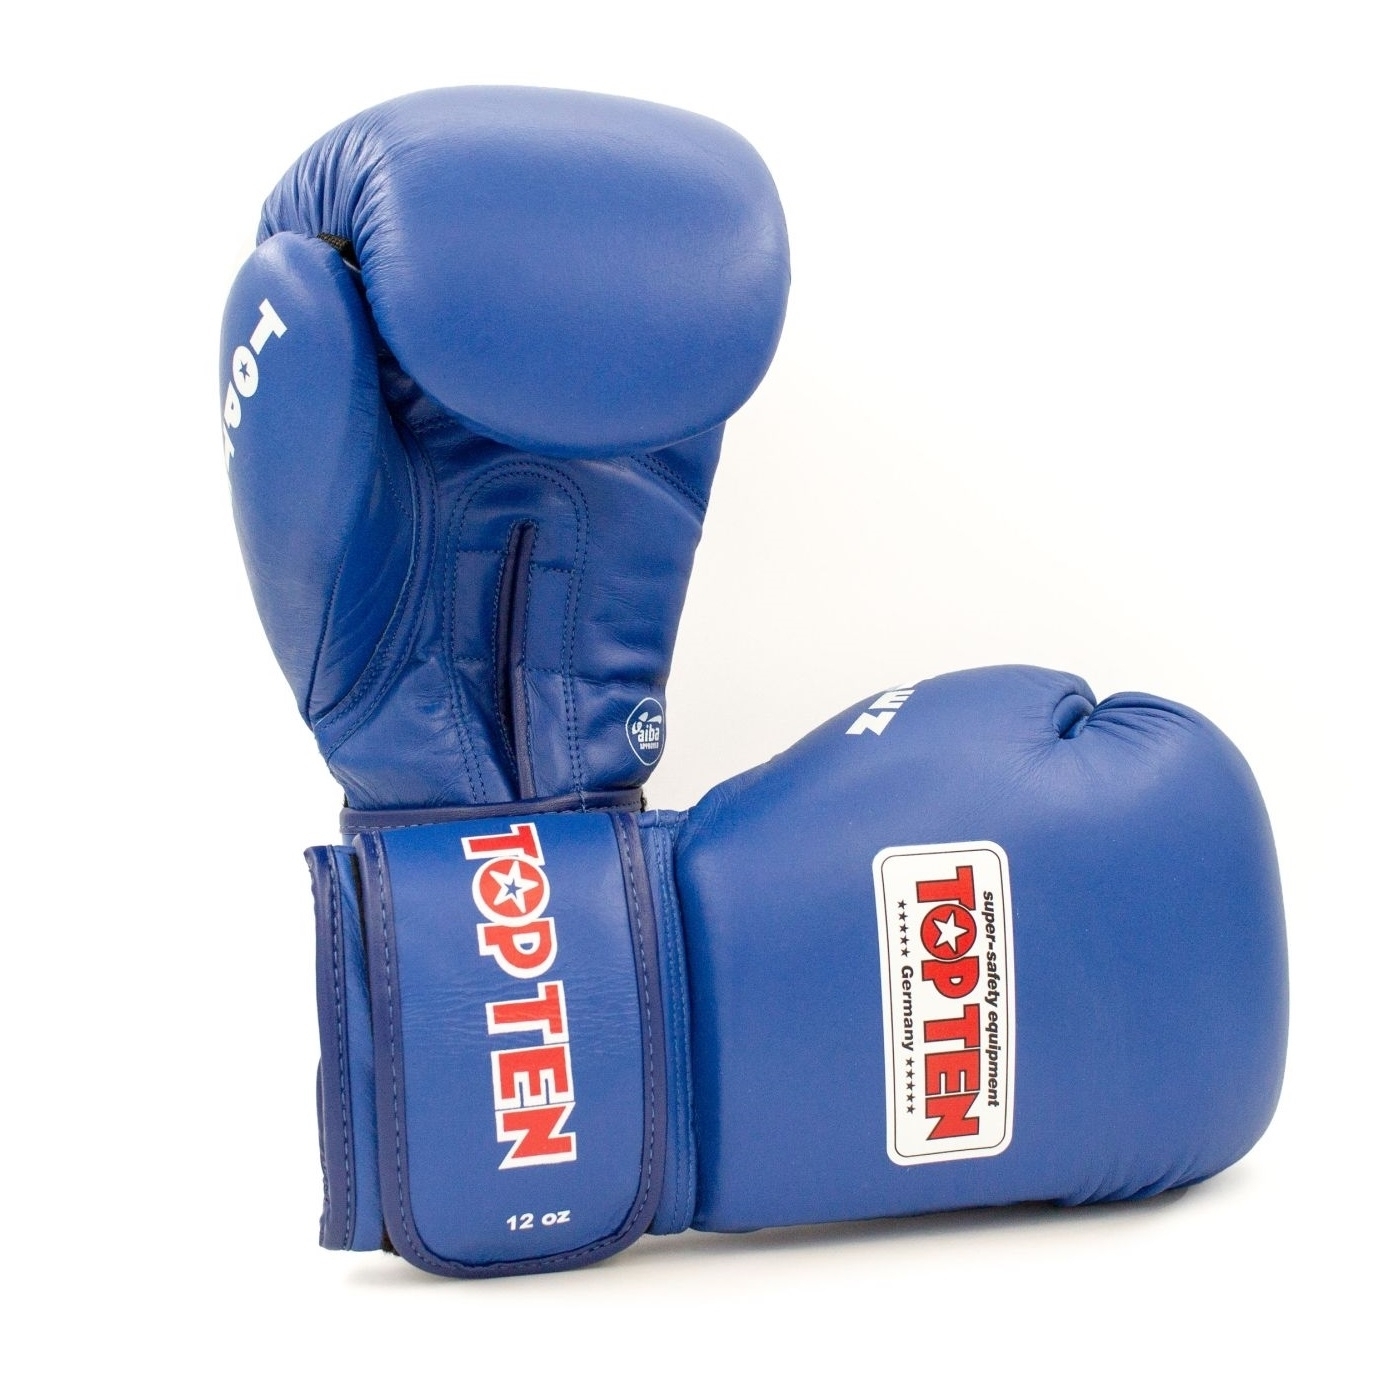 Ten boxing. Боксерские перчатки Top ten 10 oz. Боксёрские перчатки перчатки бокс Top ten Competition Aiba. Топ Тен перчатки боксерские АИБА. Боксерские перчатки Top-ten синий.